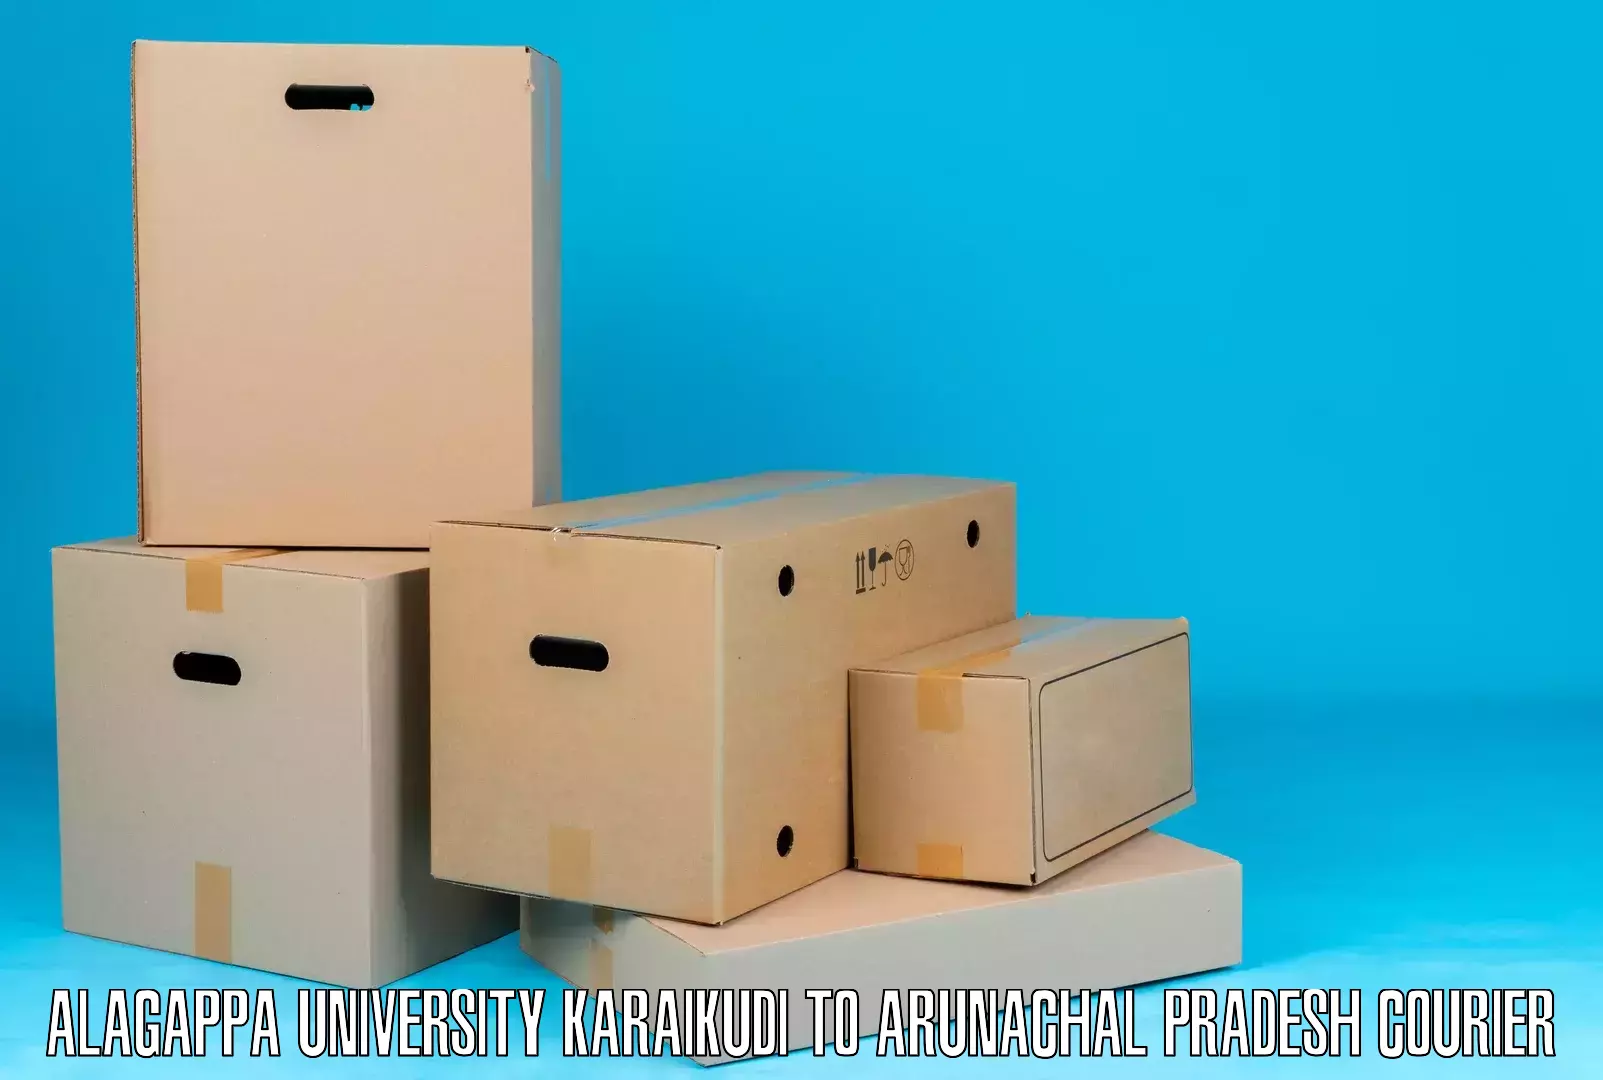 Package delivery network Alagappa University Karaikudi to Arunachal Pradesh